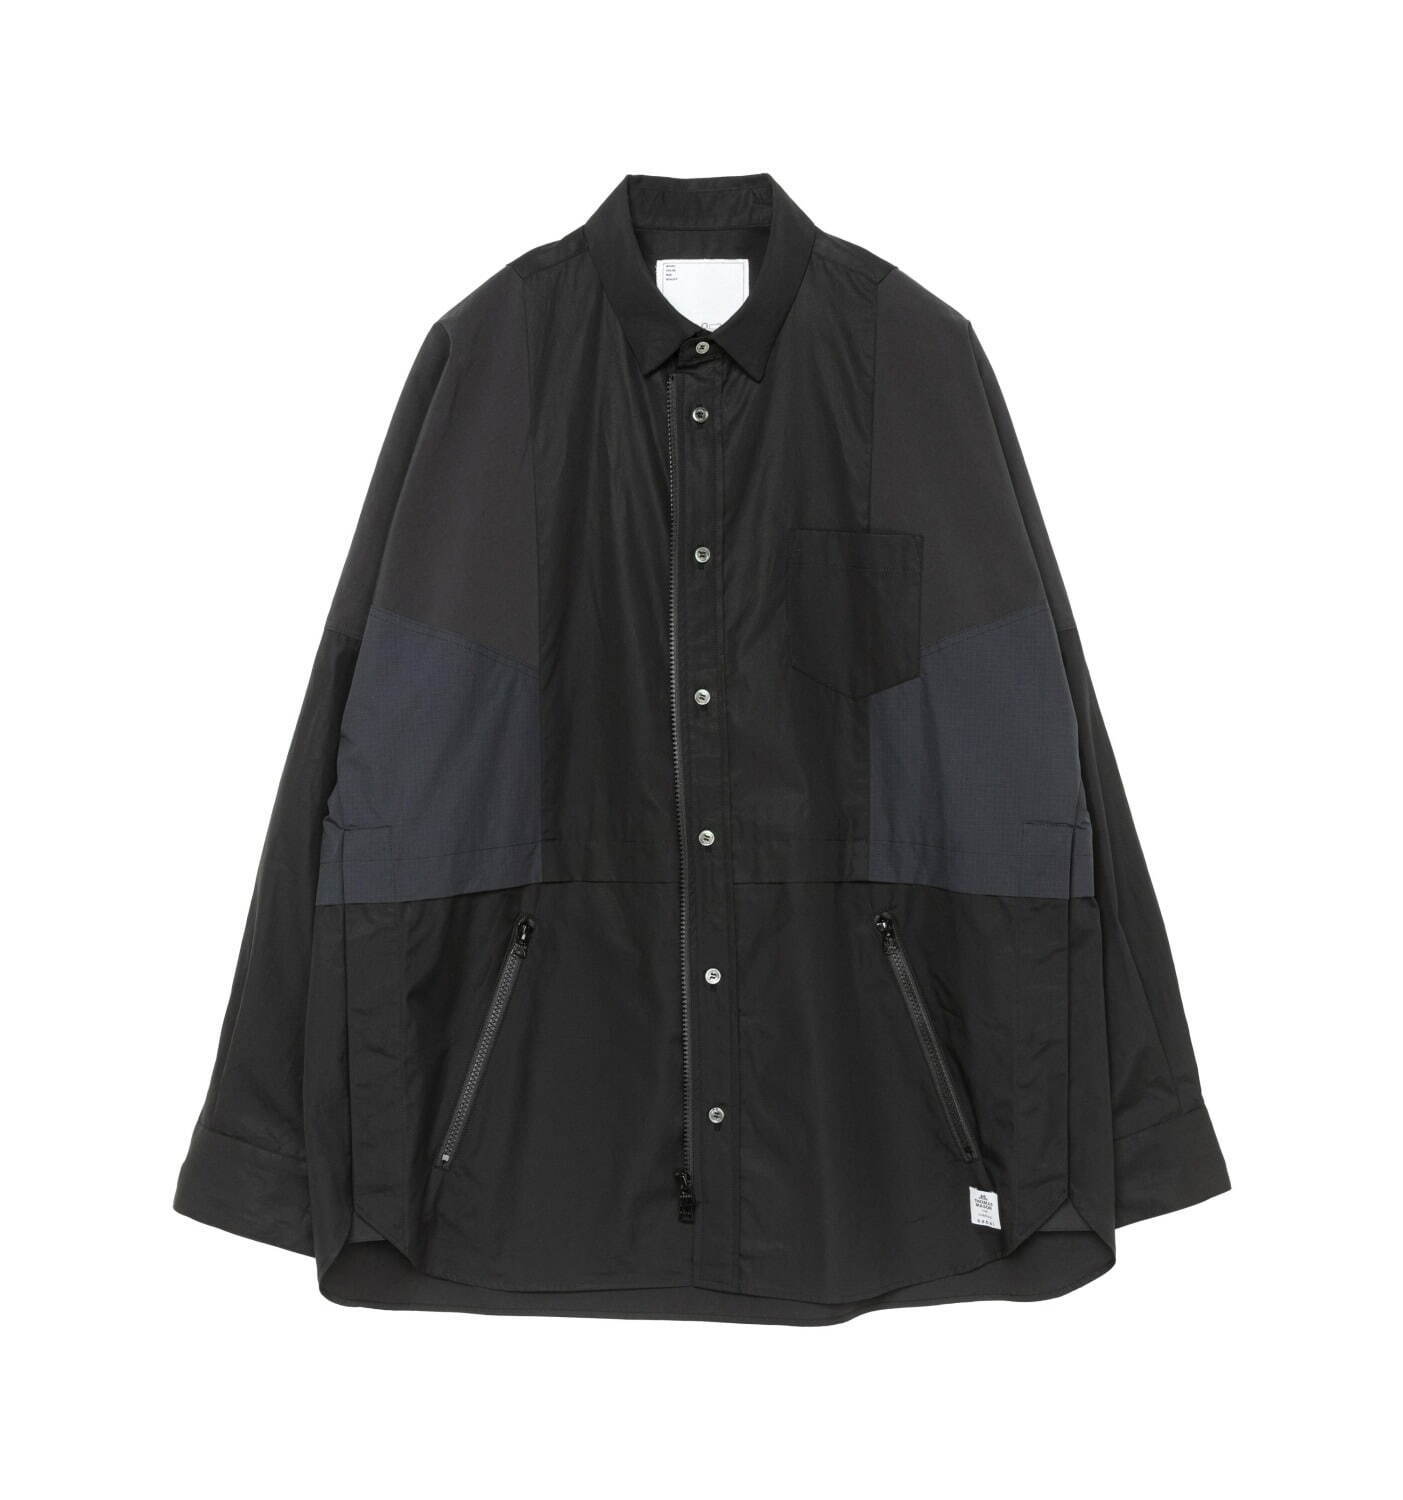 sacai 伊勢丹新宿店 メンズ館限定“オールブラック”ドッキングシャツ＆ロゴTシャツ - ファッションプレス